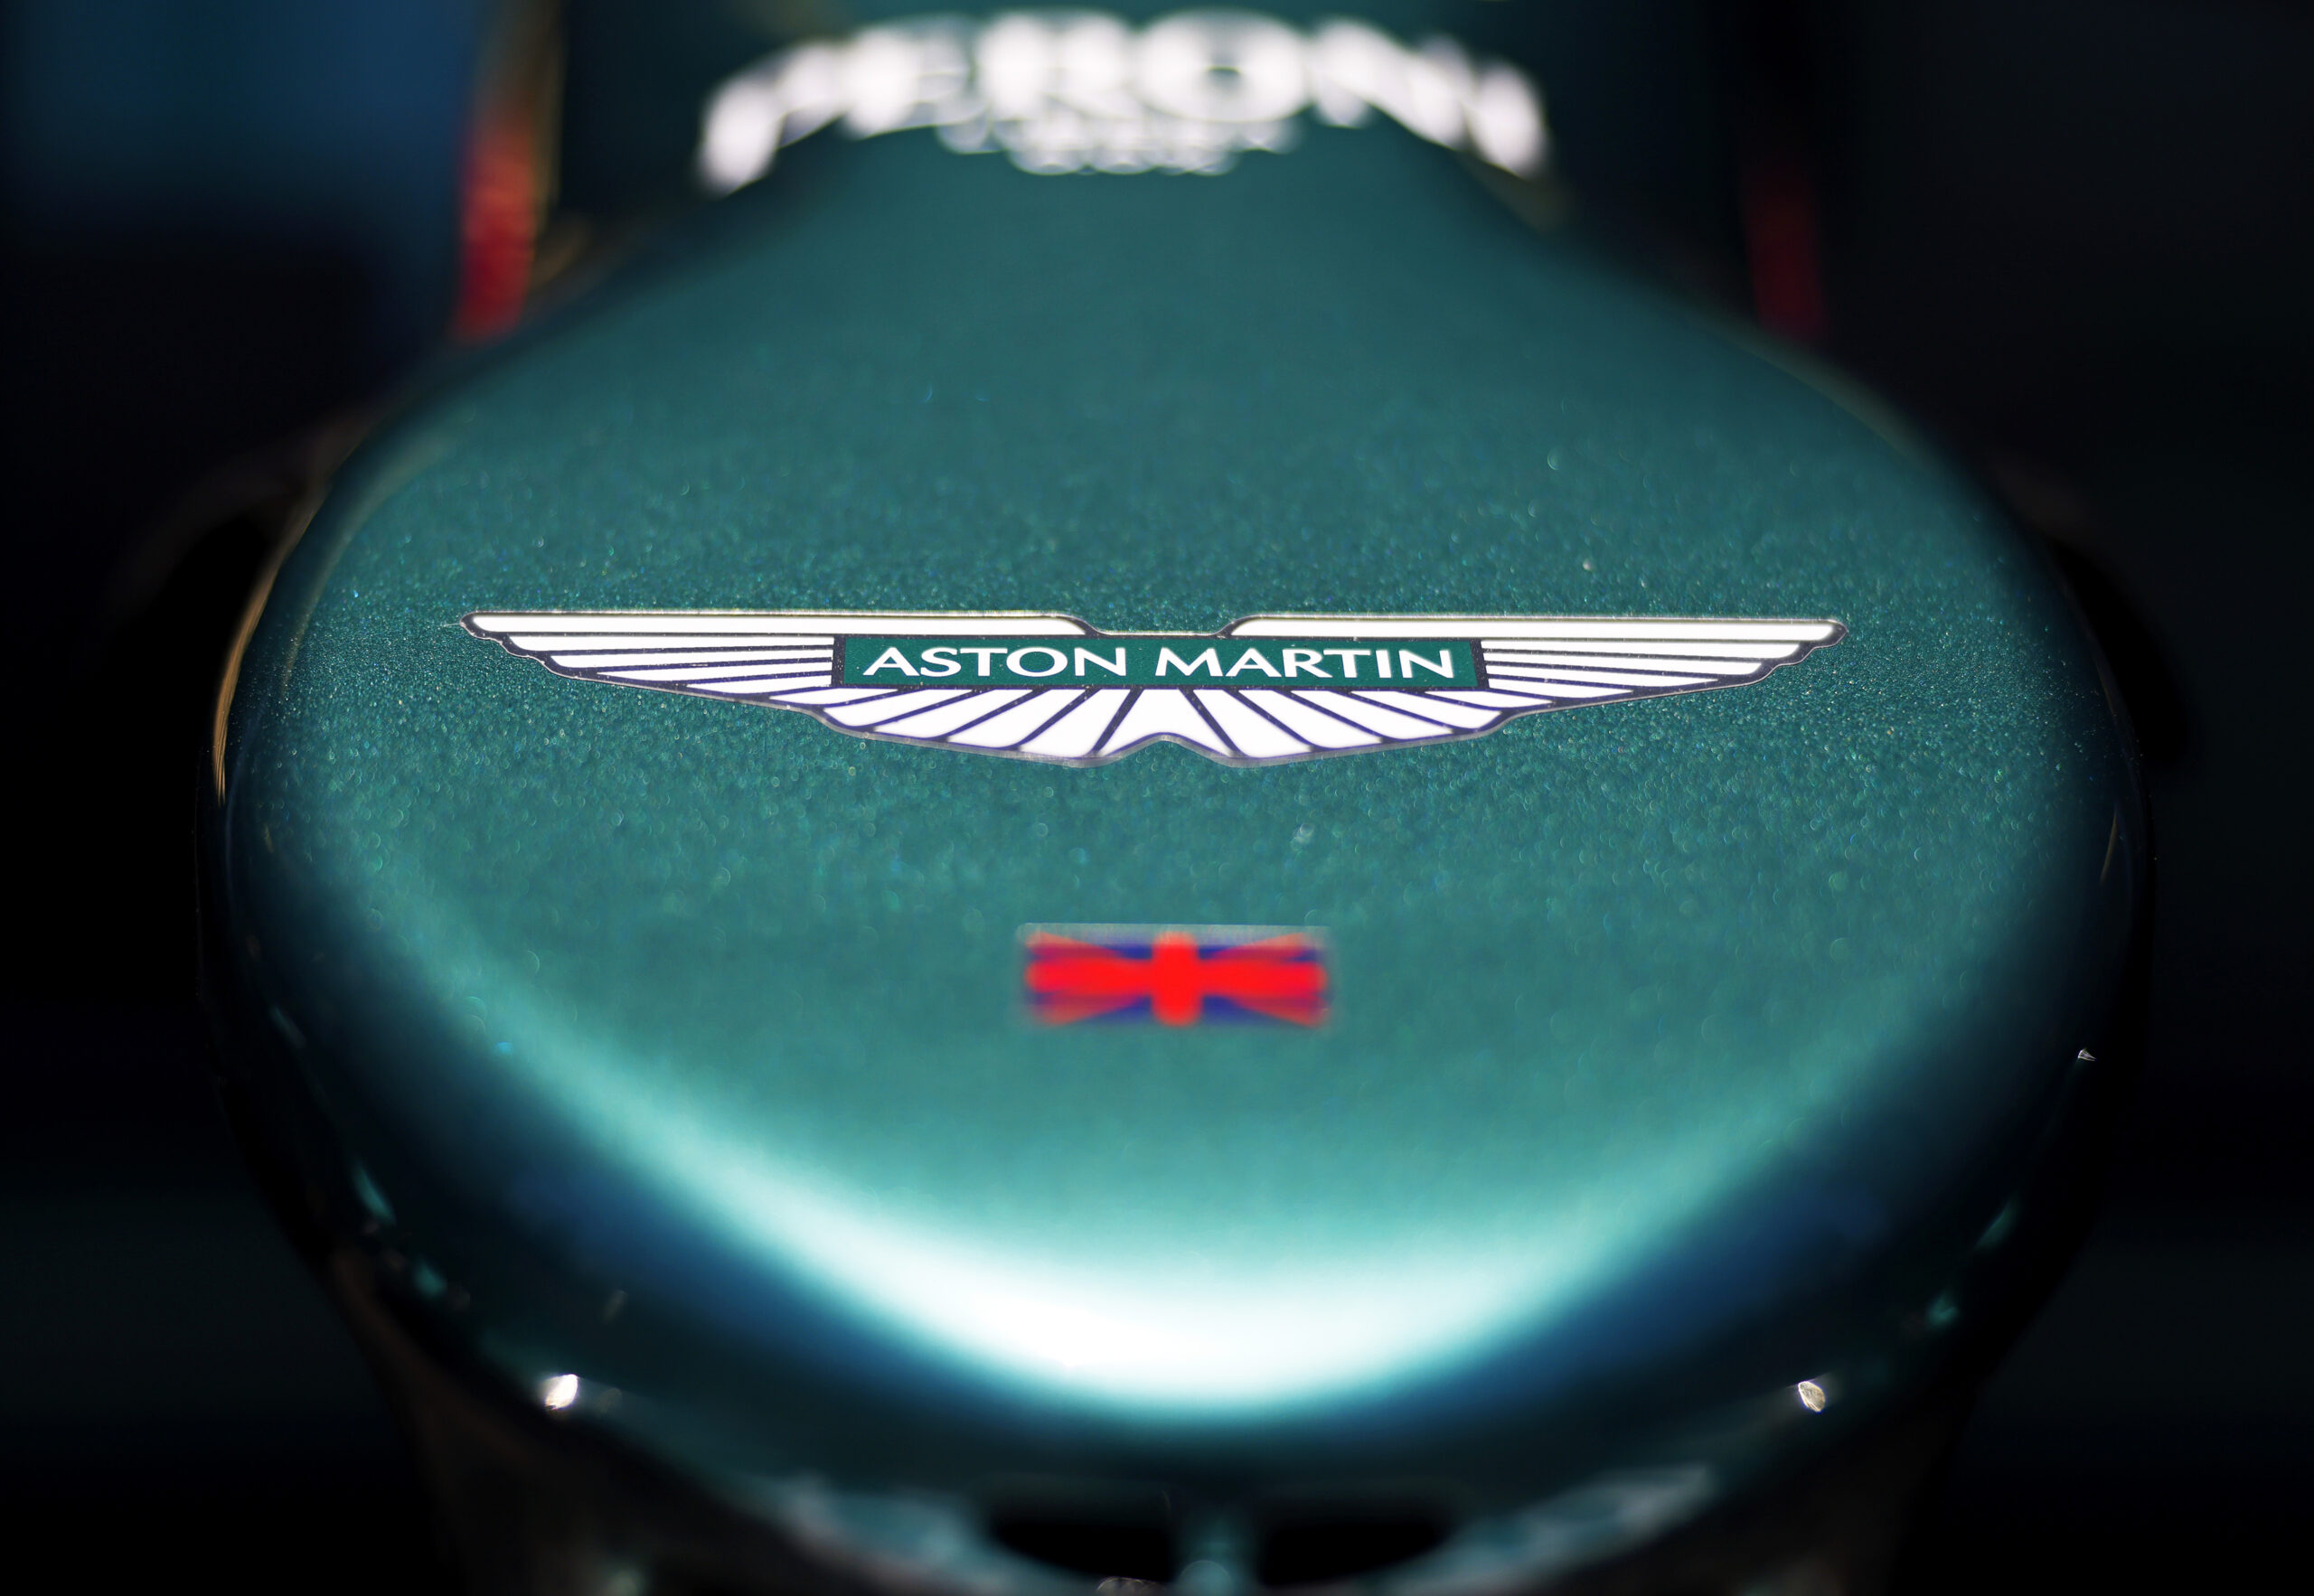 F1 - Officiel : la demande de réexamen d'Aston Martin rejetée par la FIA